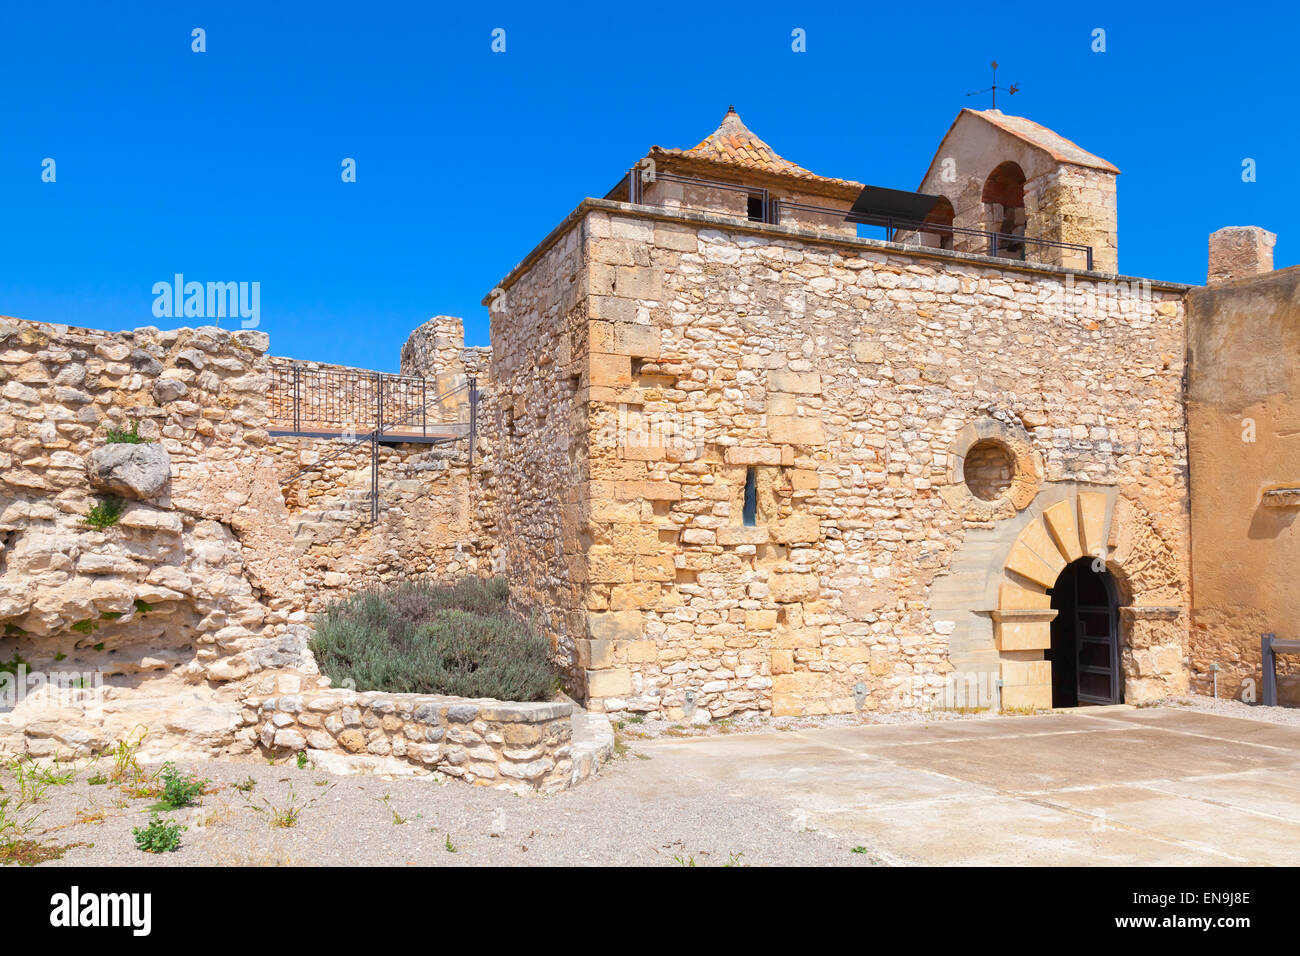 Medieval stone castle facade, main landmark of Calafell town, Spain Stock Photo